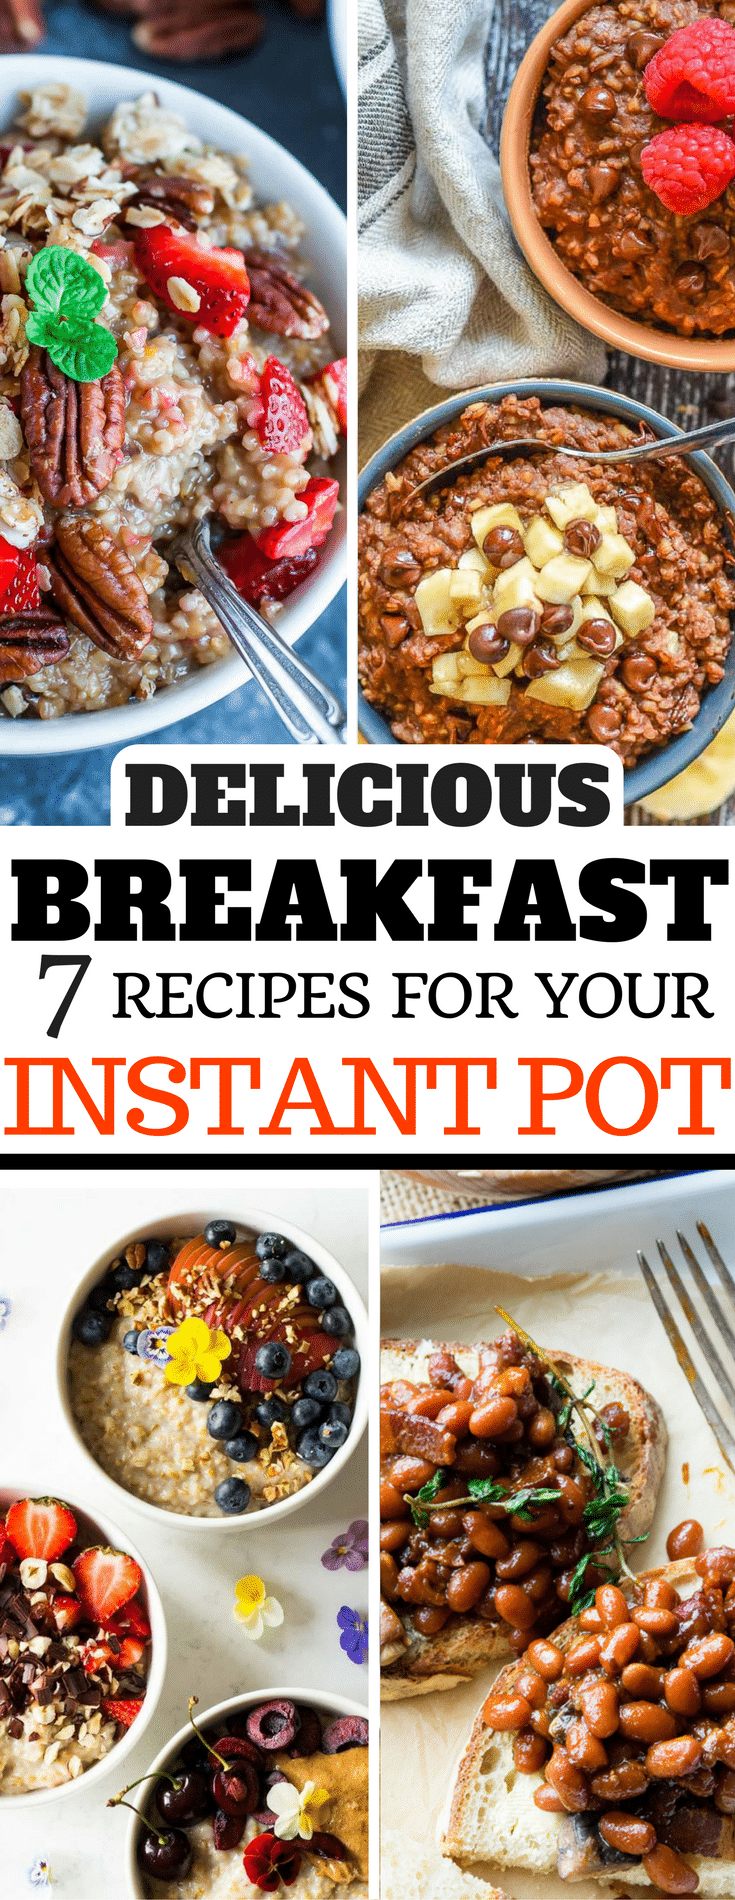 best breakfast recipes for instant potn#instantpot #breakfastrecipes #breakfast #instantpotrecipes